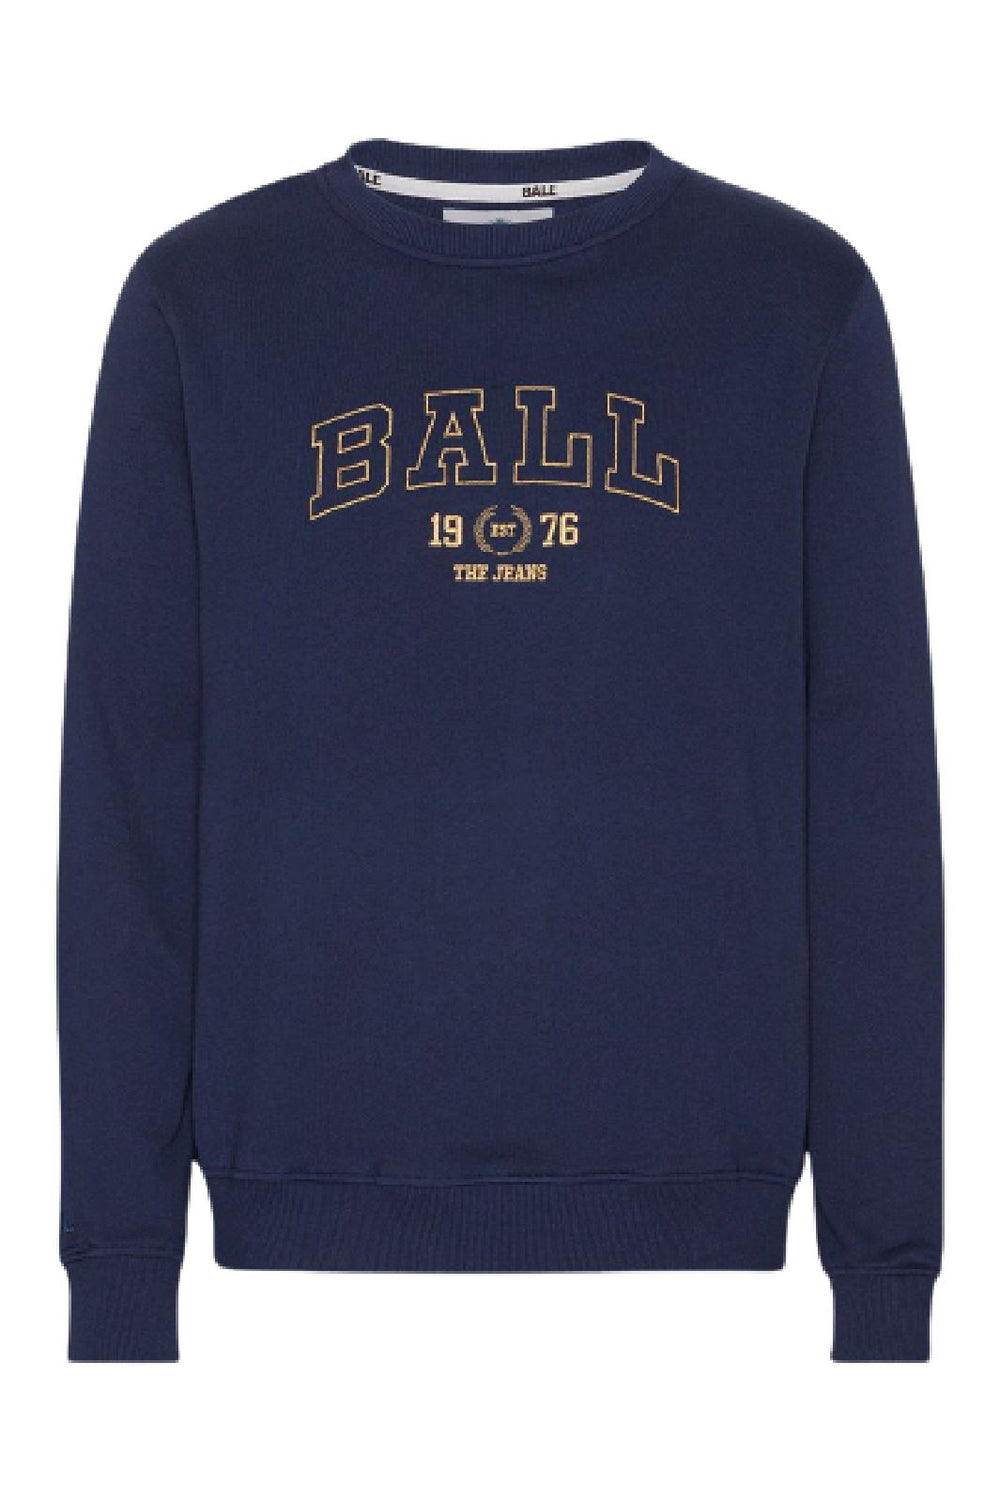 Ball - L. Taylor - Ocean Sweatshirts 